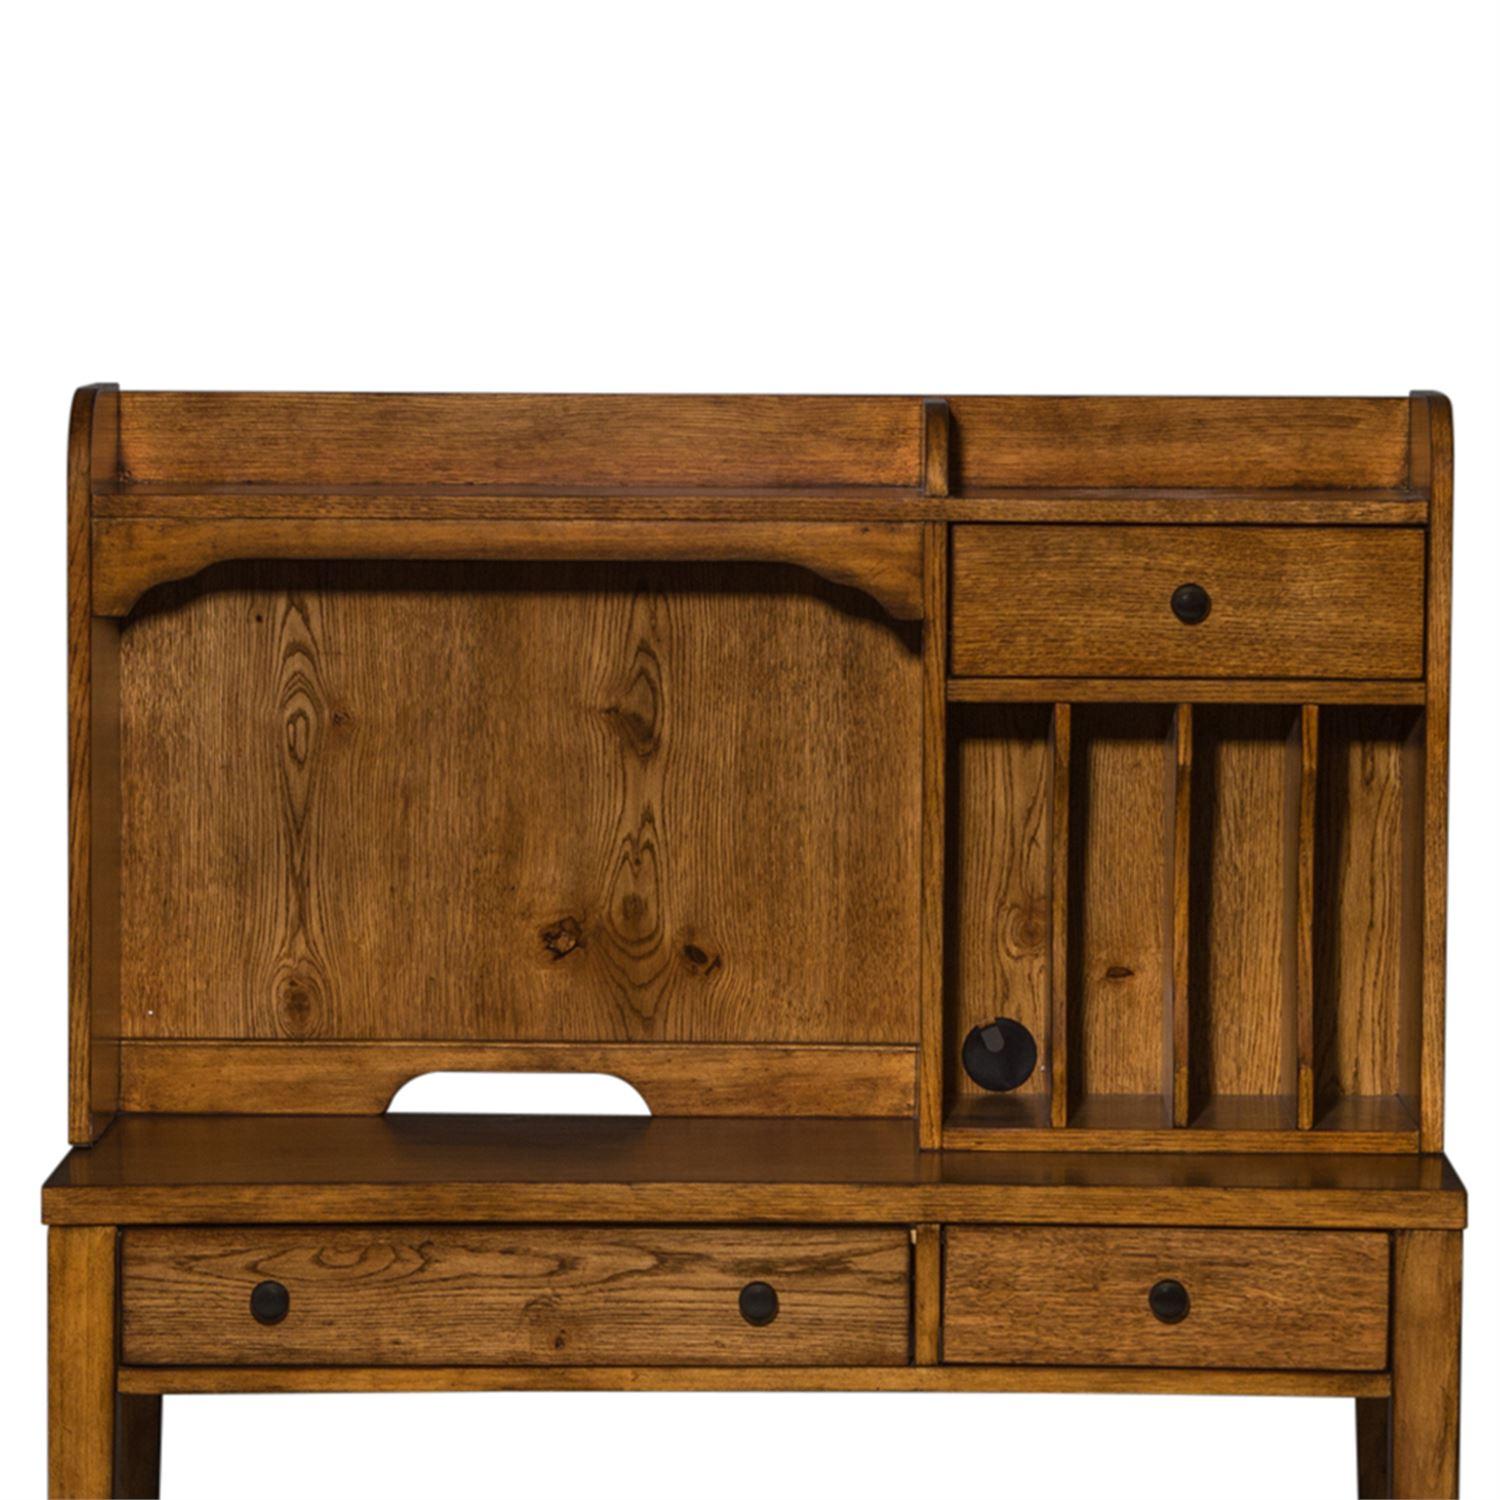 

    
Rustic Oak Finish Executive Desk Set 4Pcs Hearthstone (382-HO) Liberty Furniture
